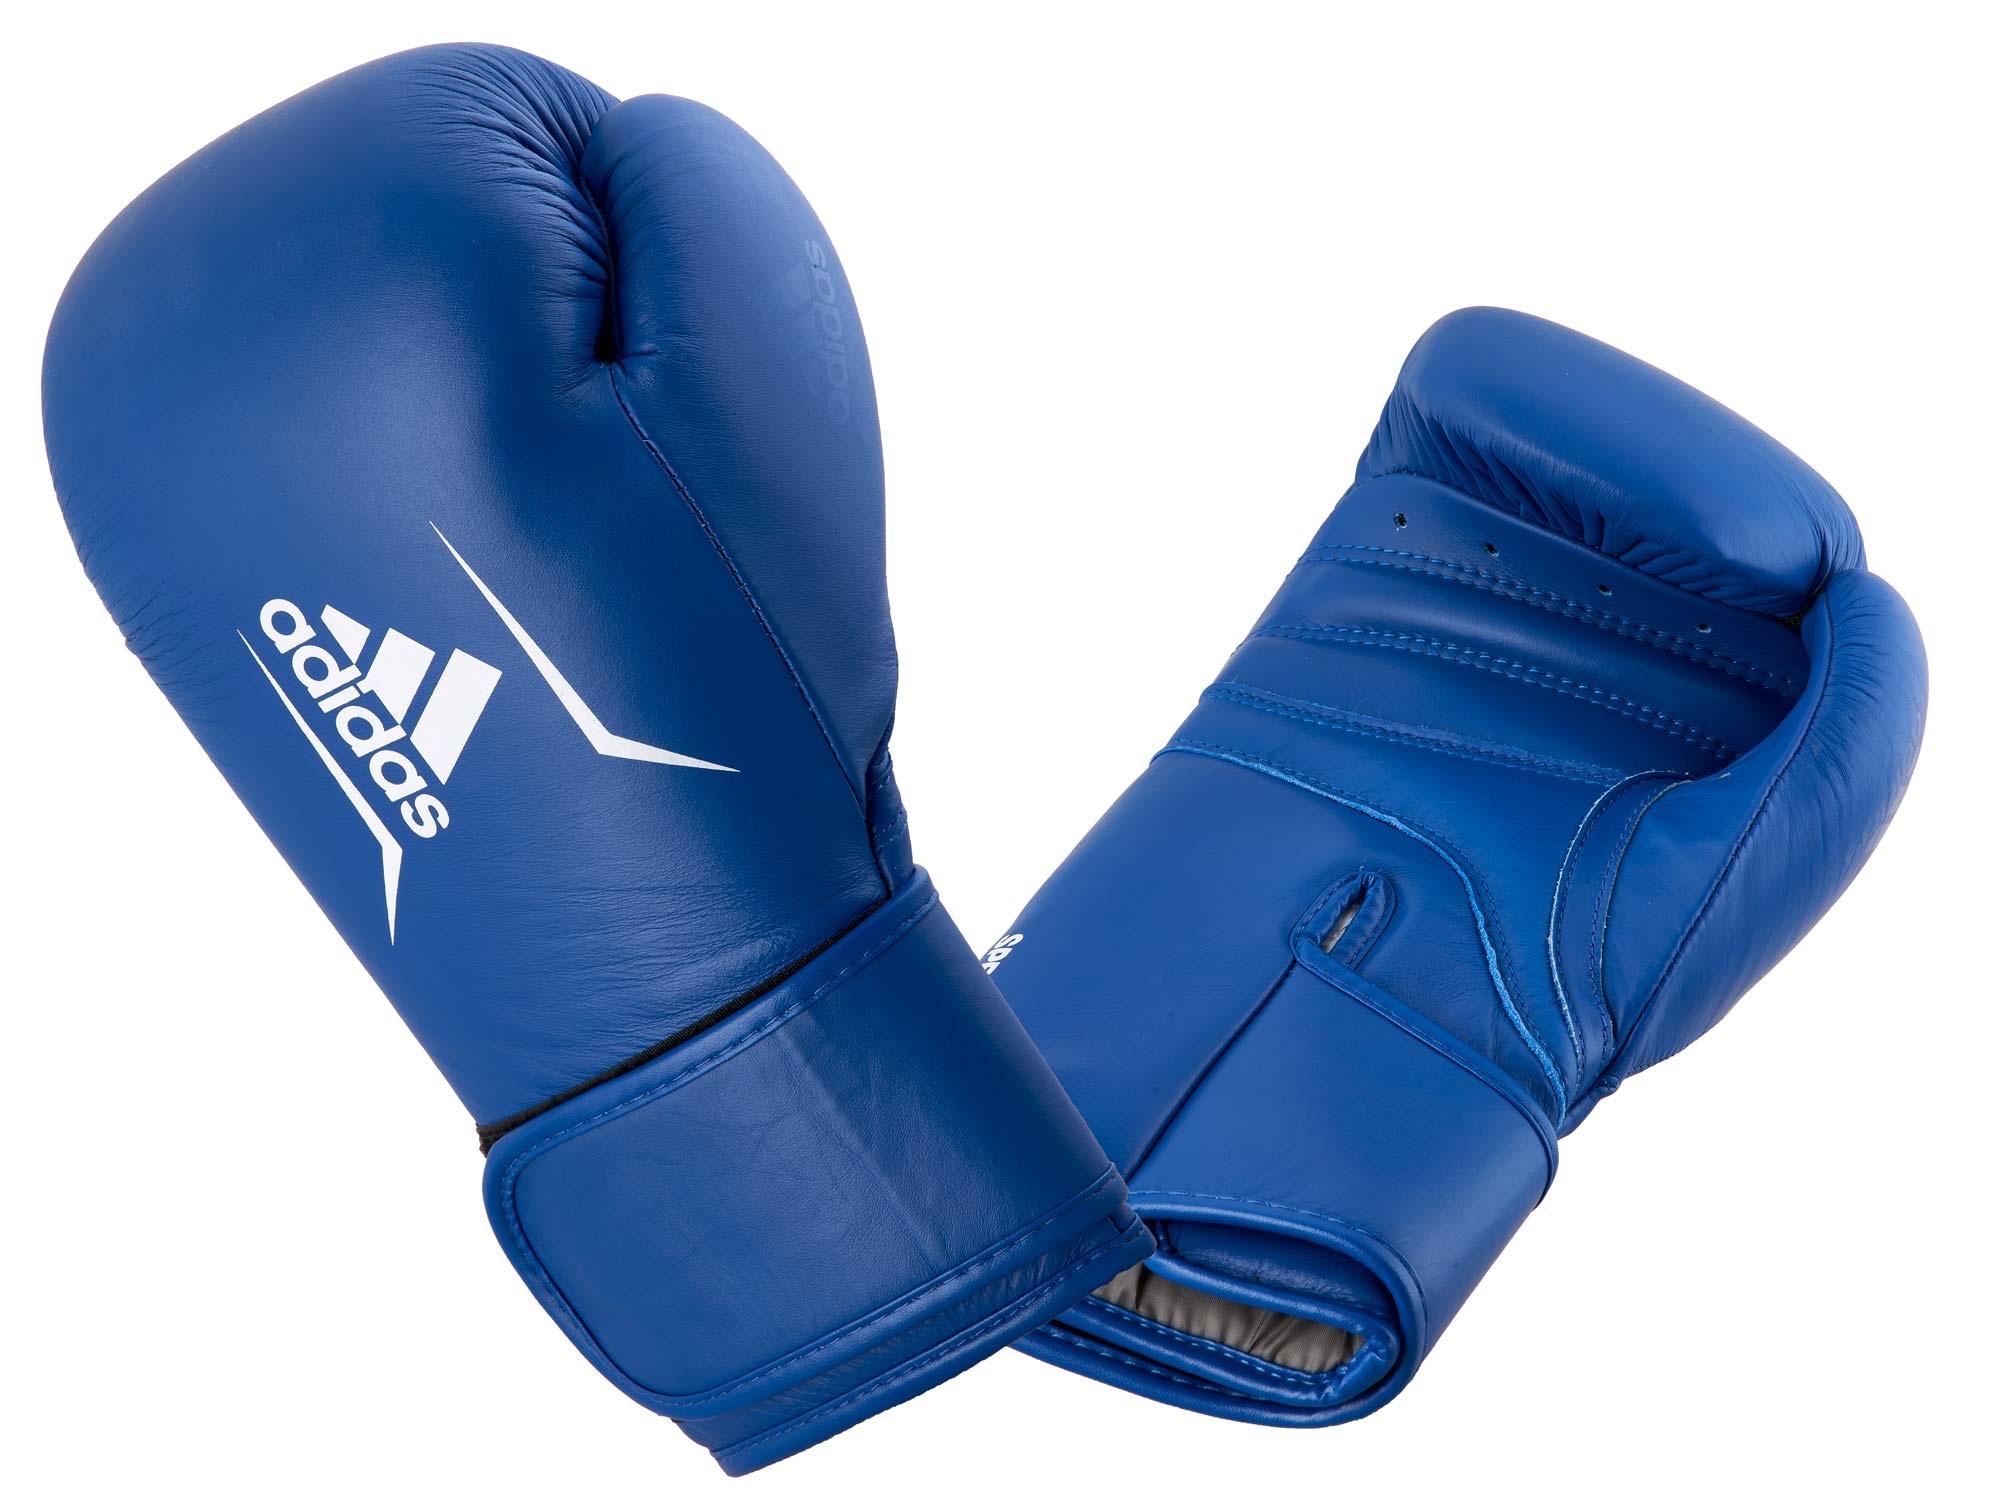  adidas boxing glove Speed 175 adiSBG175 2.0, blue/white